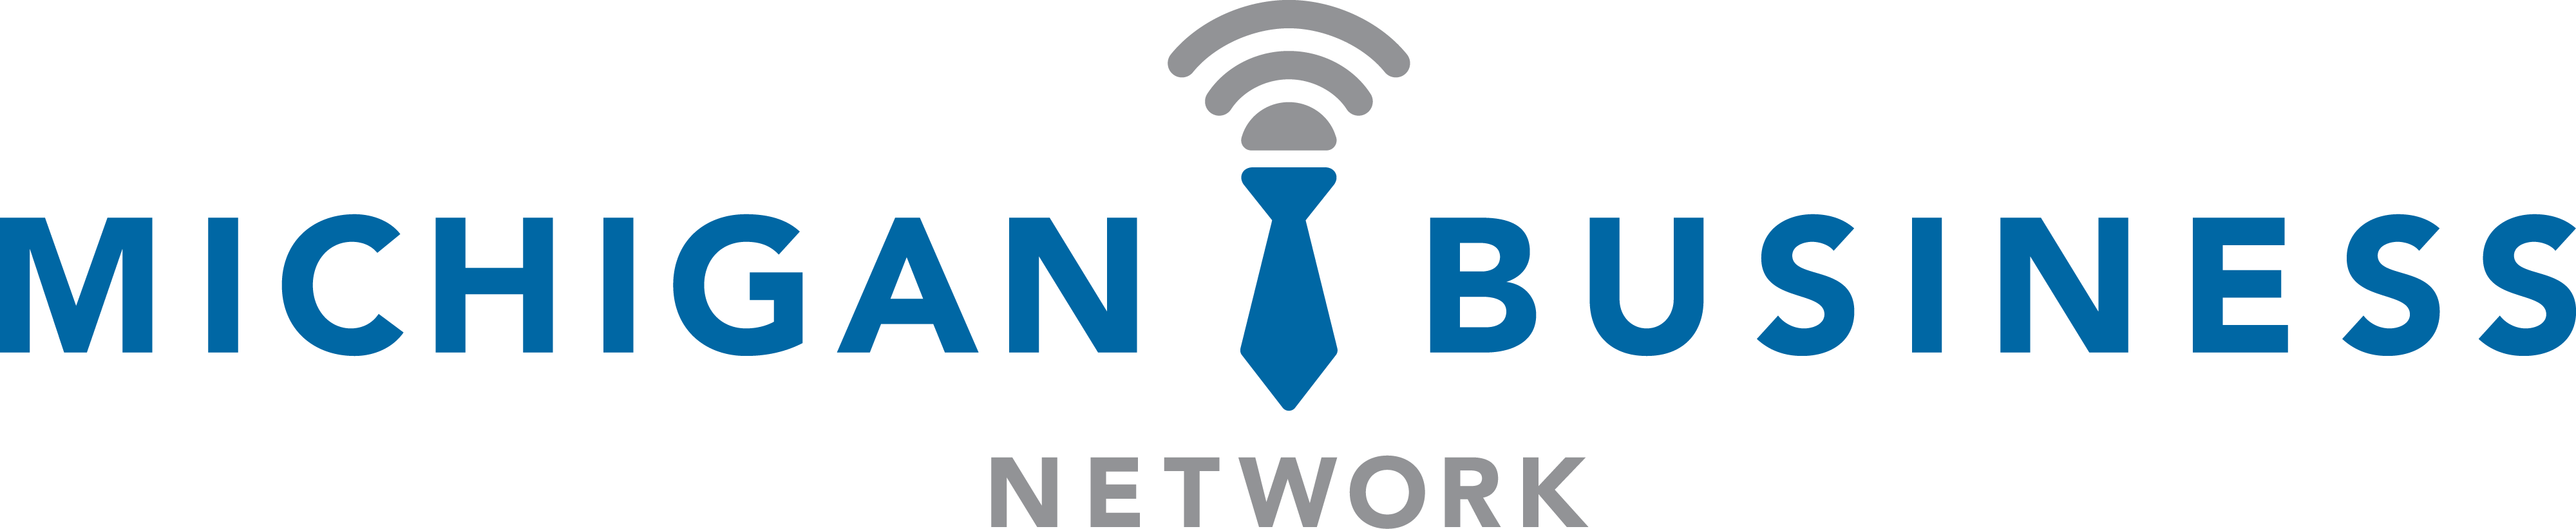 Michigan Business Network Logo